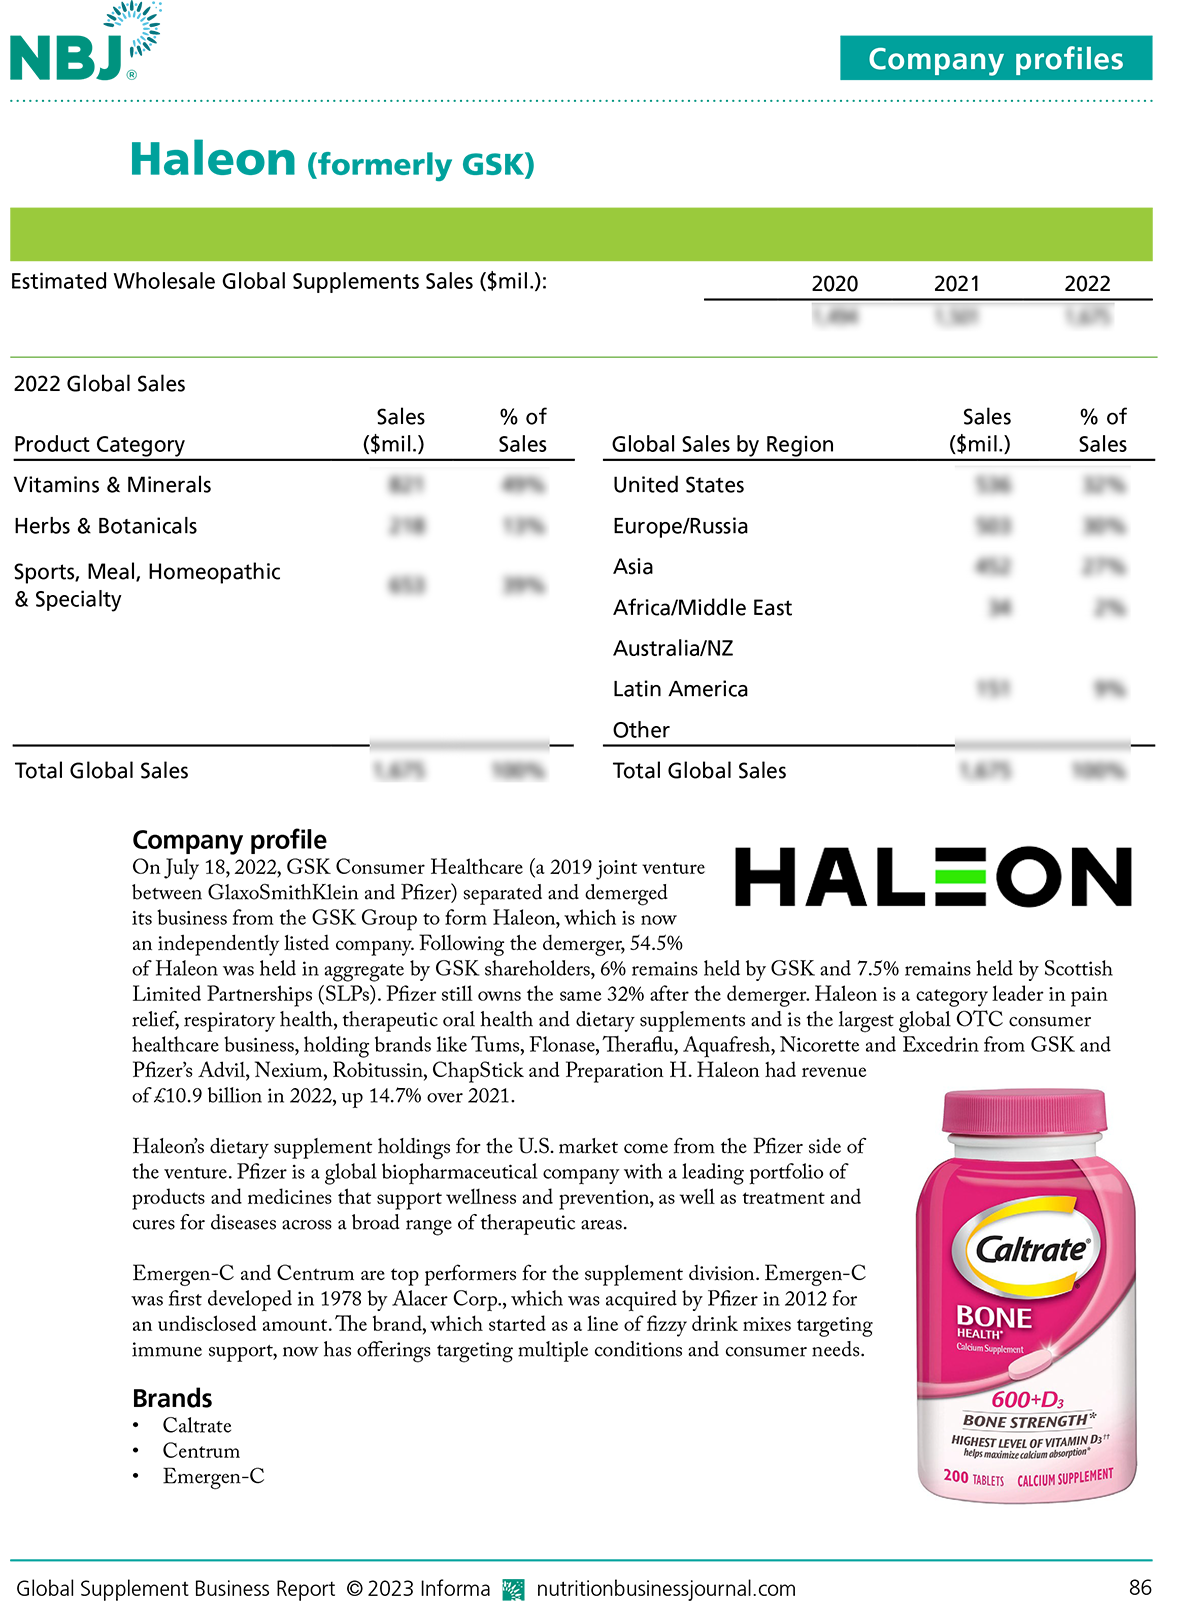 Haleon Company Profile